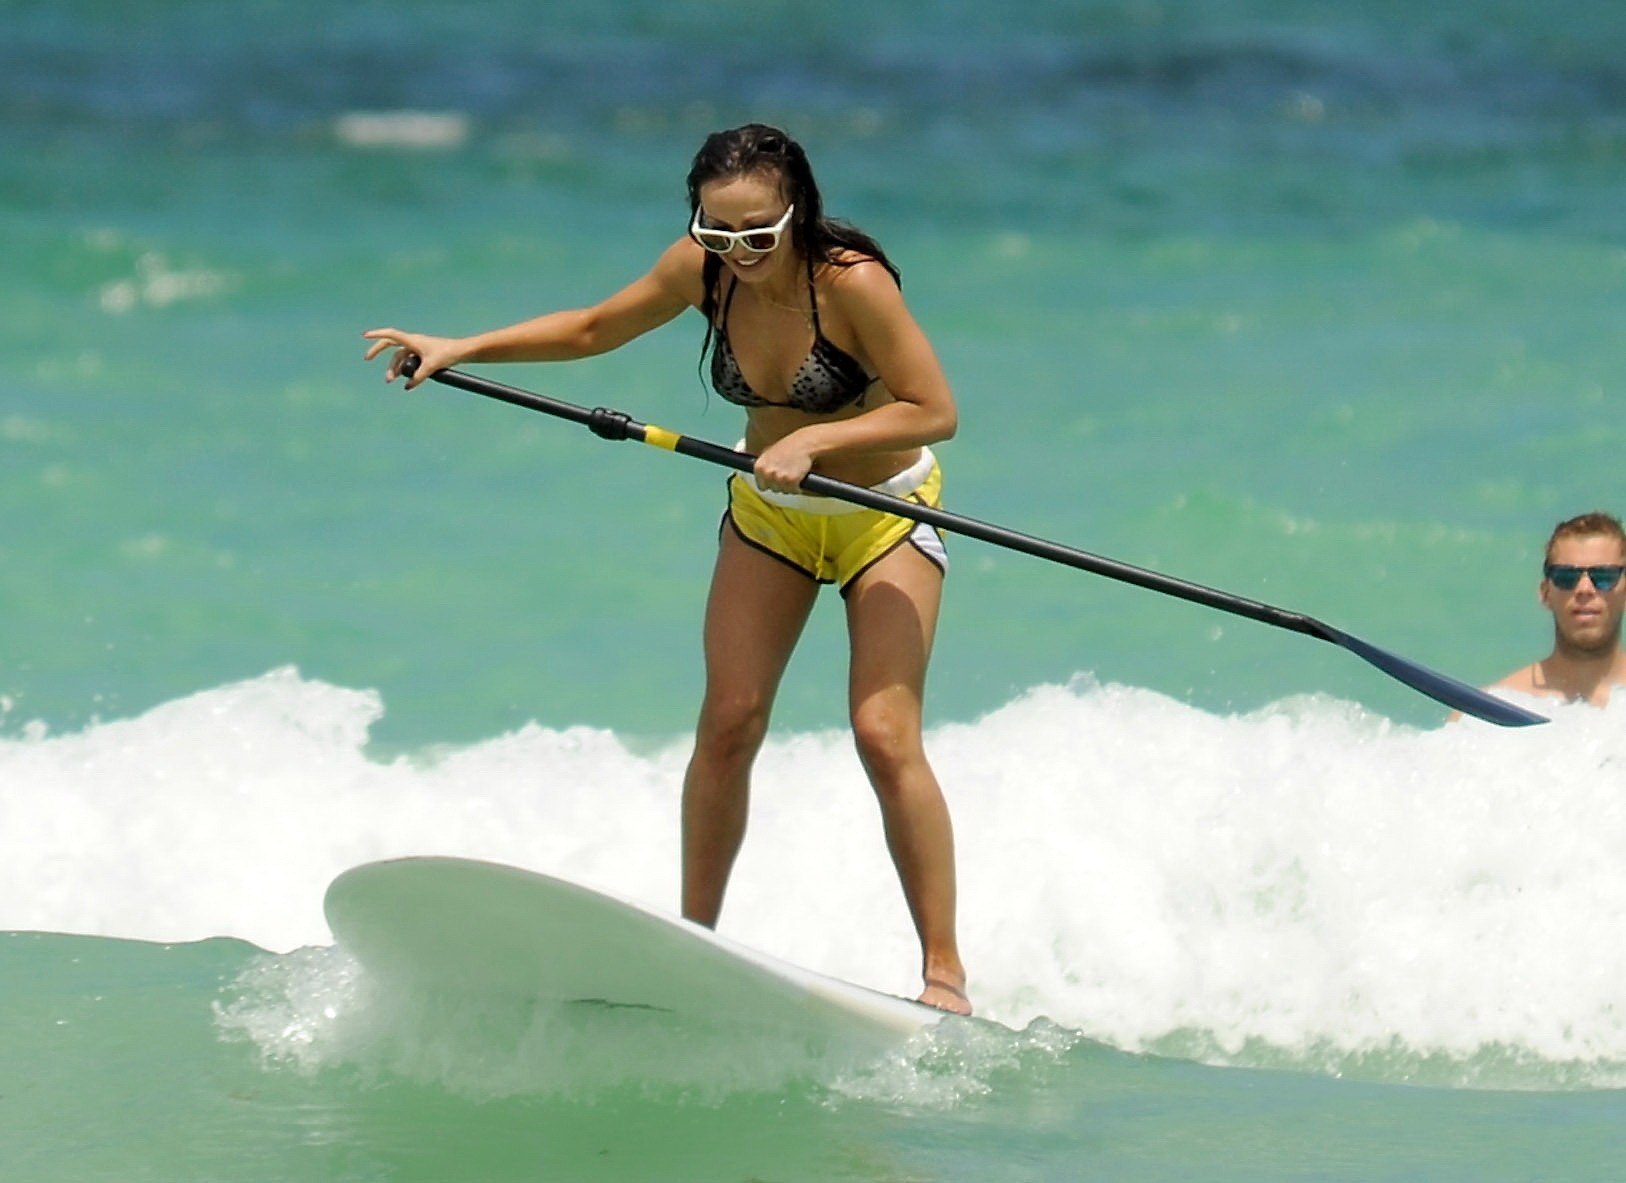 Karina smirnoff paddle surfing in miami beach indossando pantaloncini bikini top
 #75256909